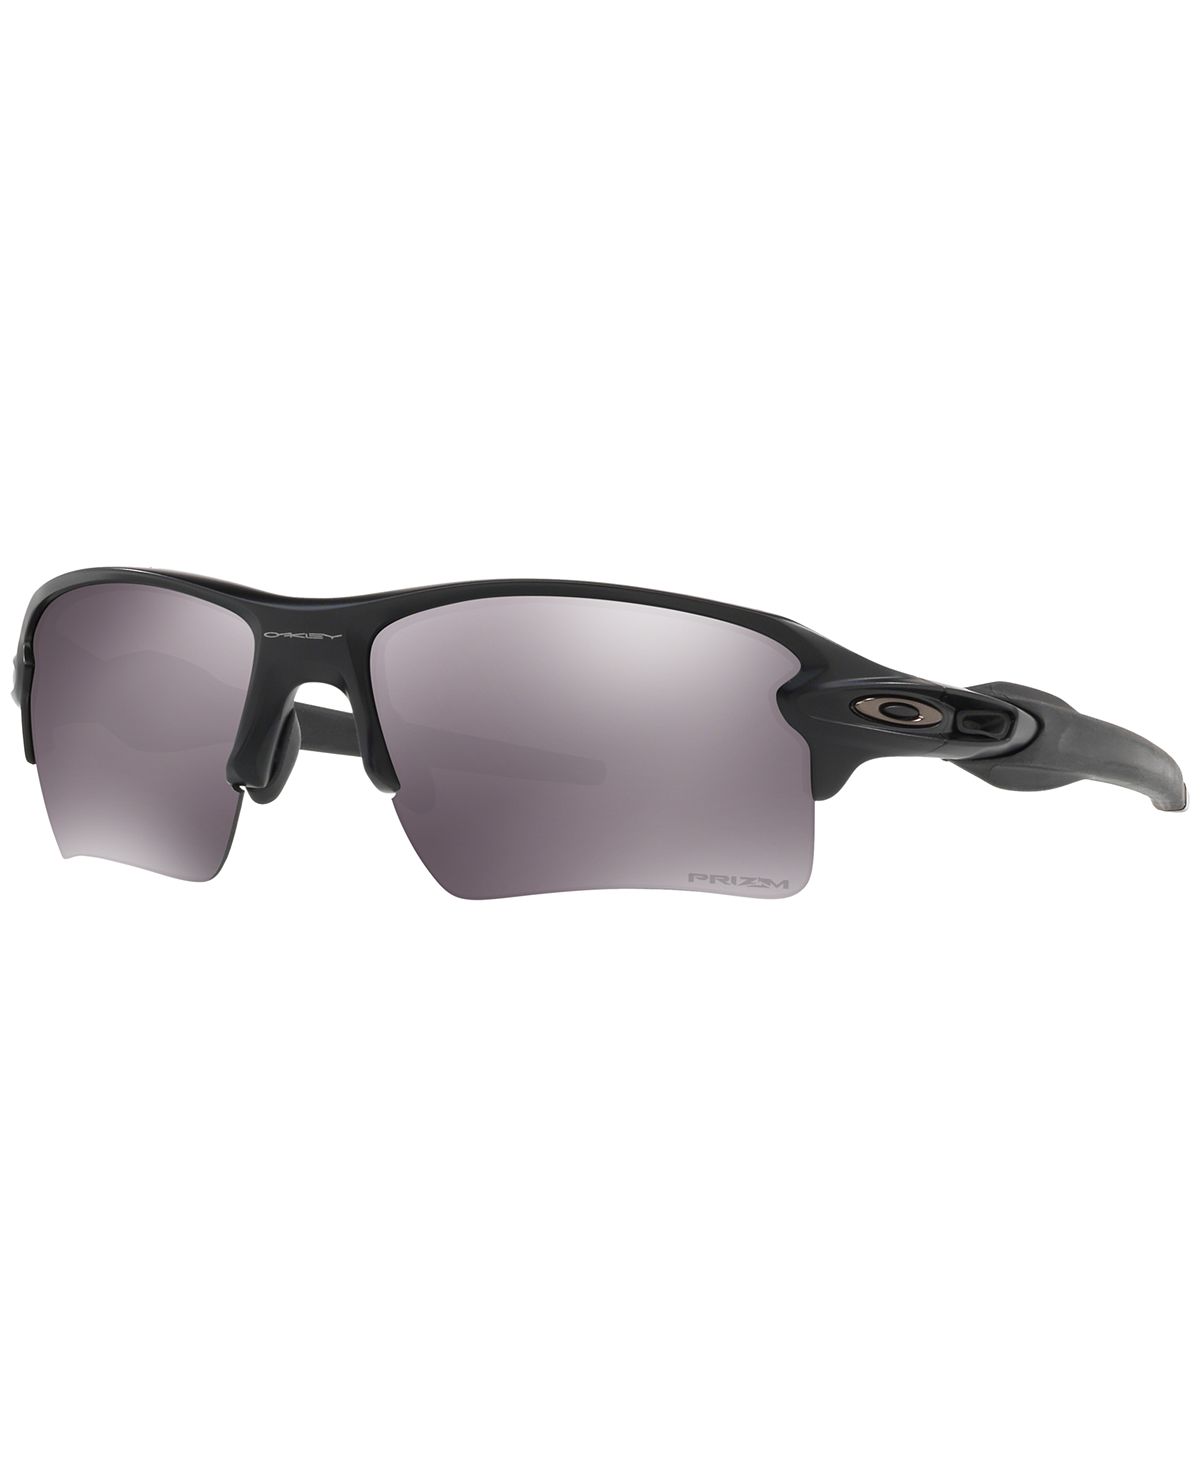 Солнцезащитные очки FLAK 2 XL OO9188 Oakley t5808 matte black 80 мл c13t580800